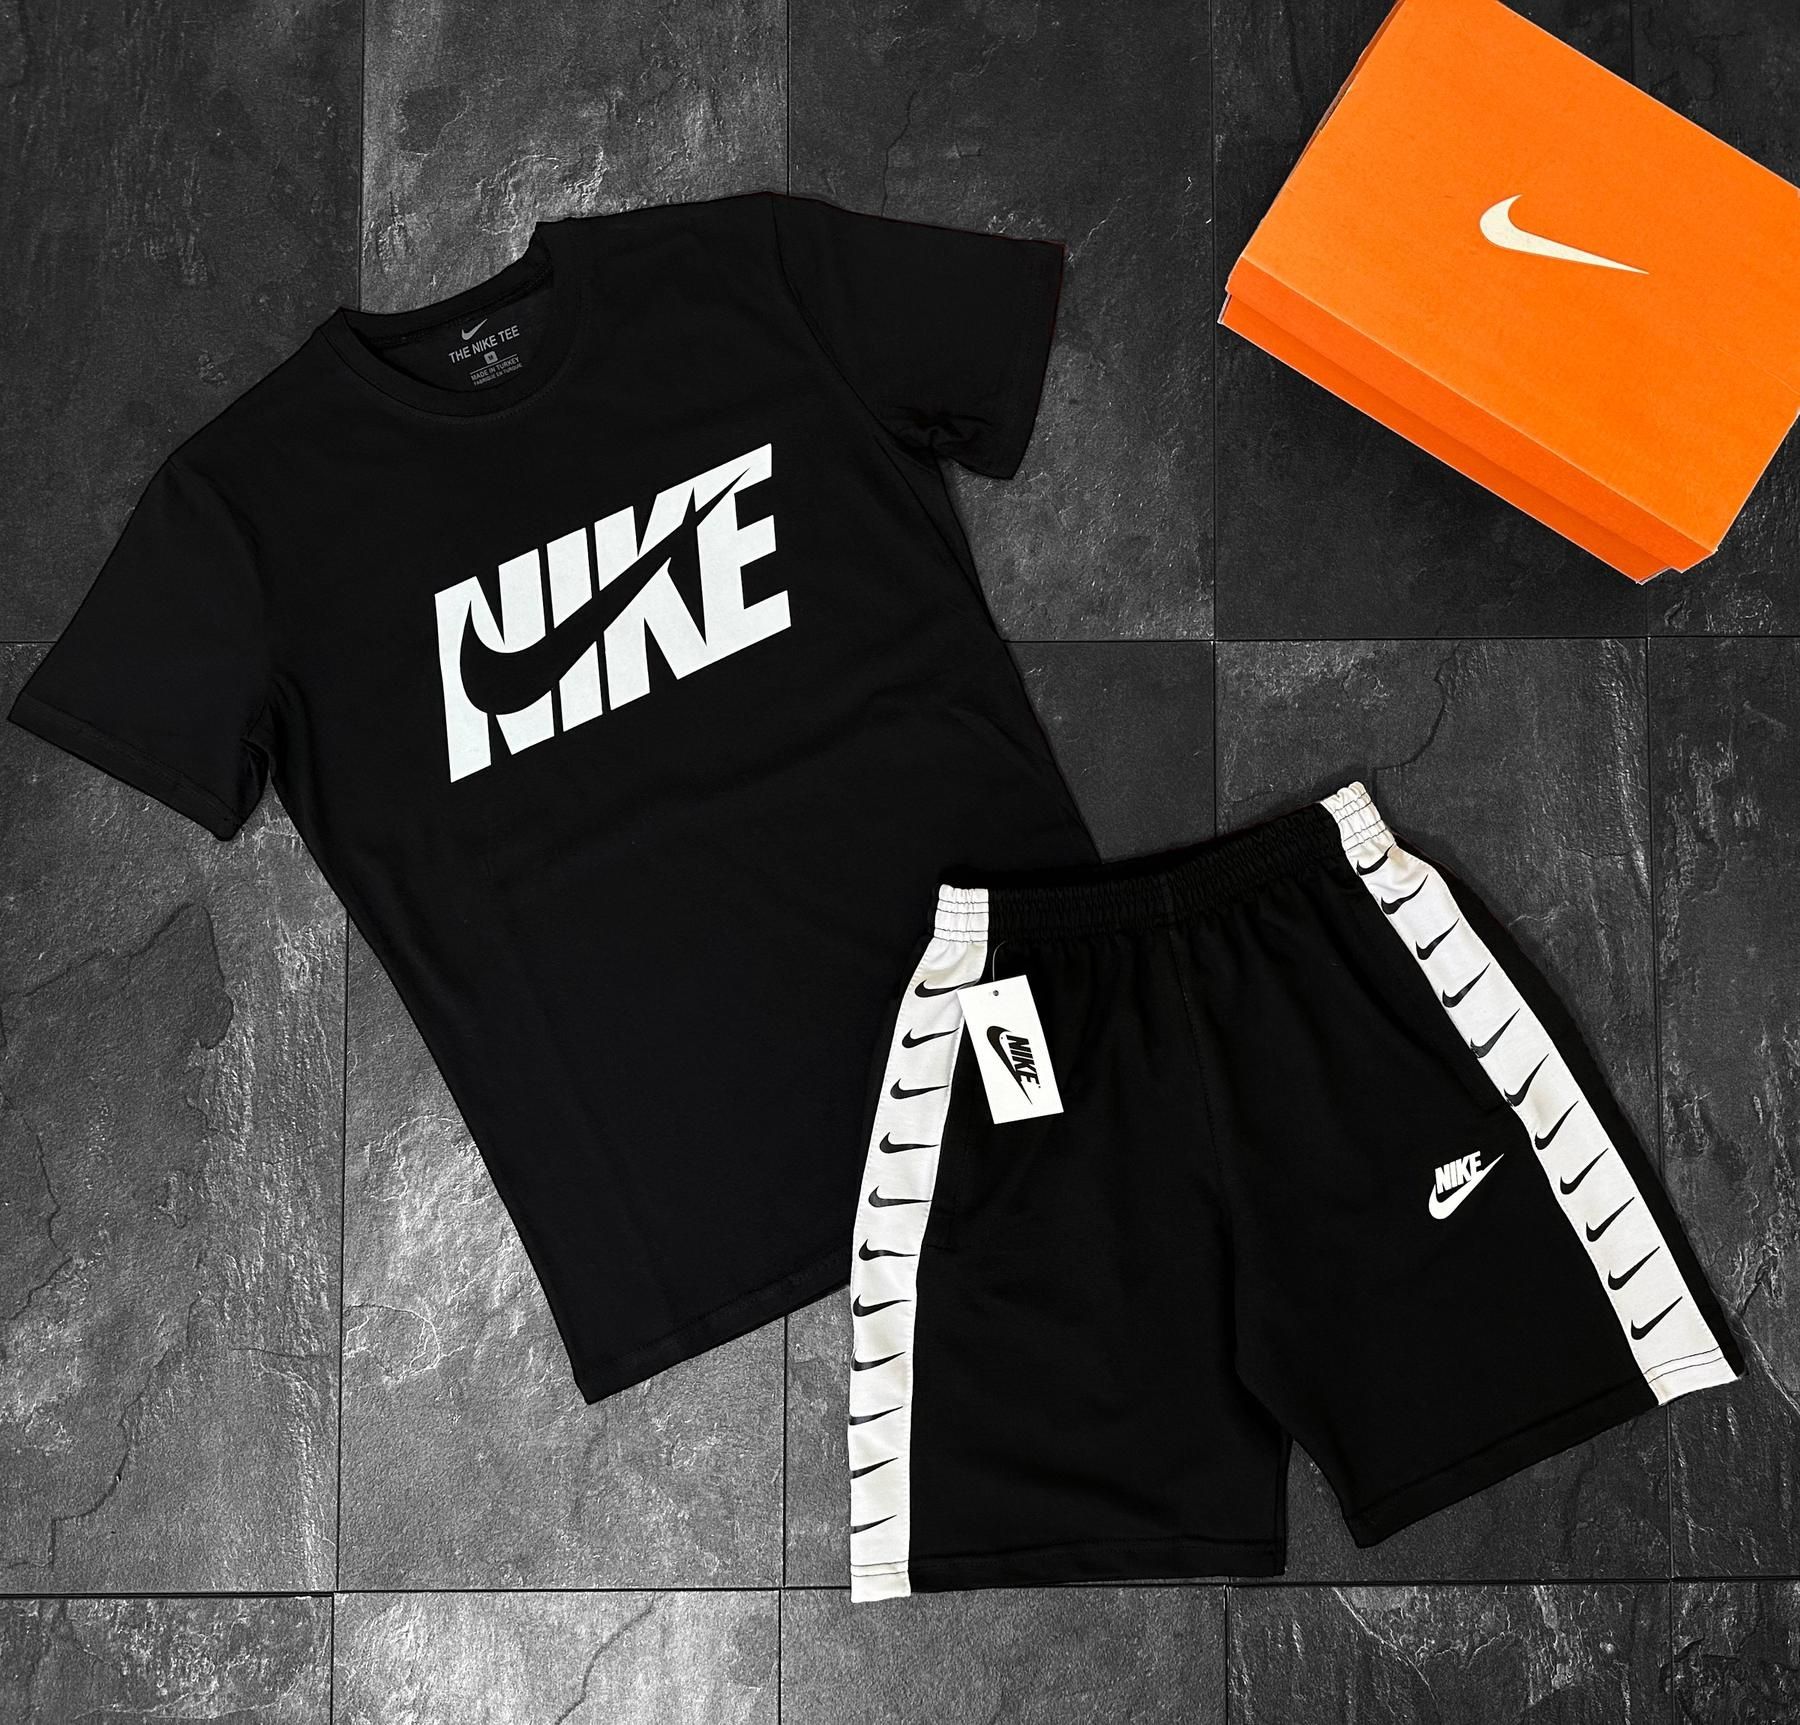 Шорты и футболка Nike мужская Найк лето